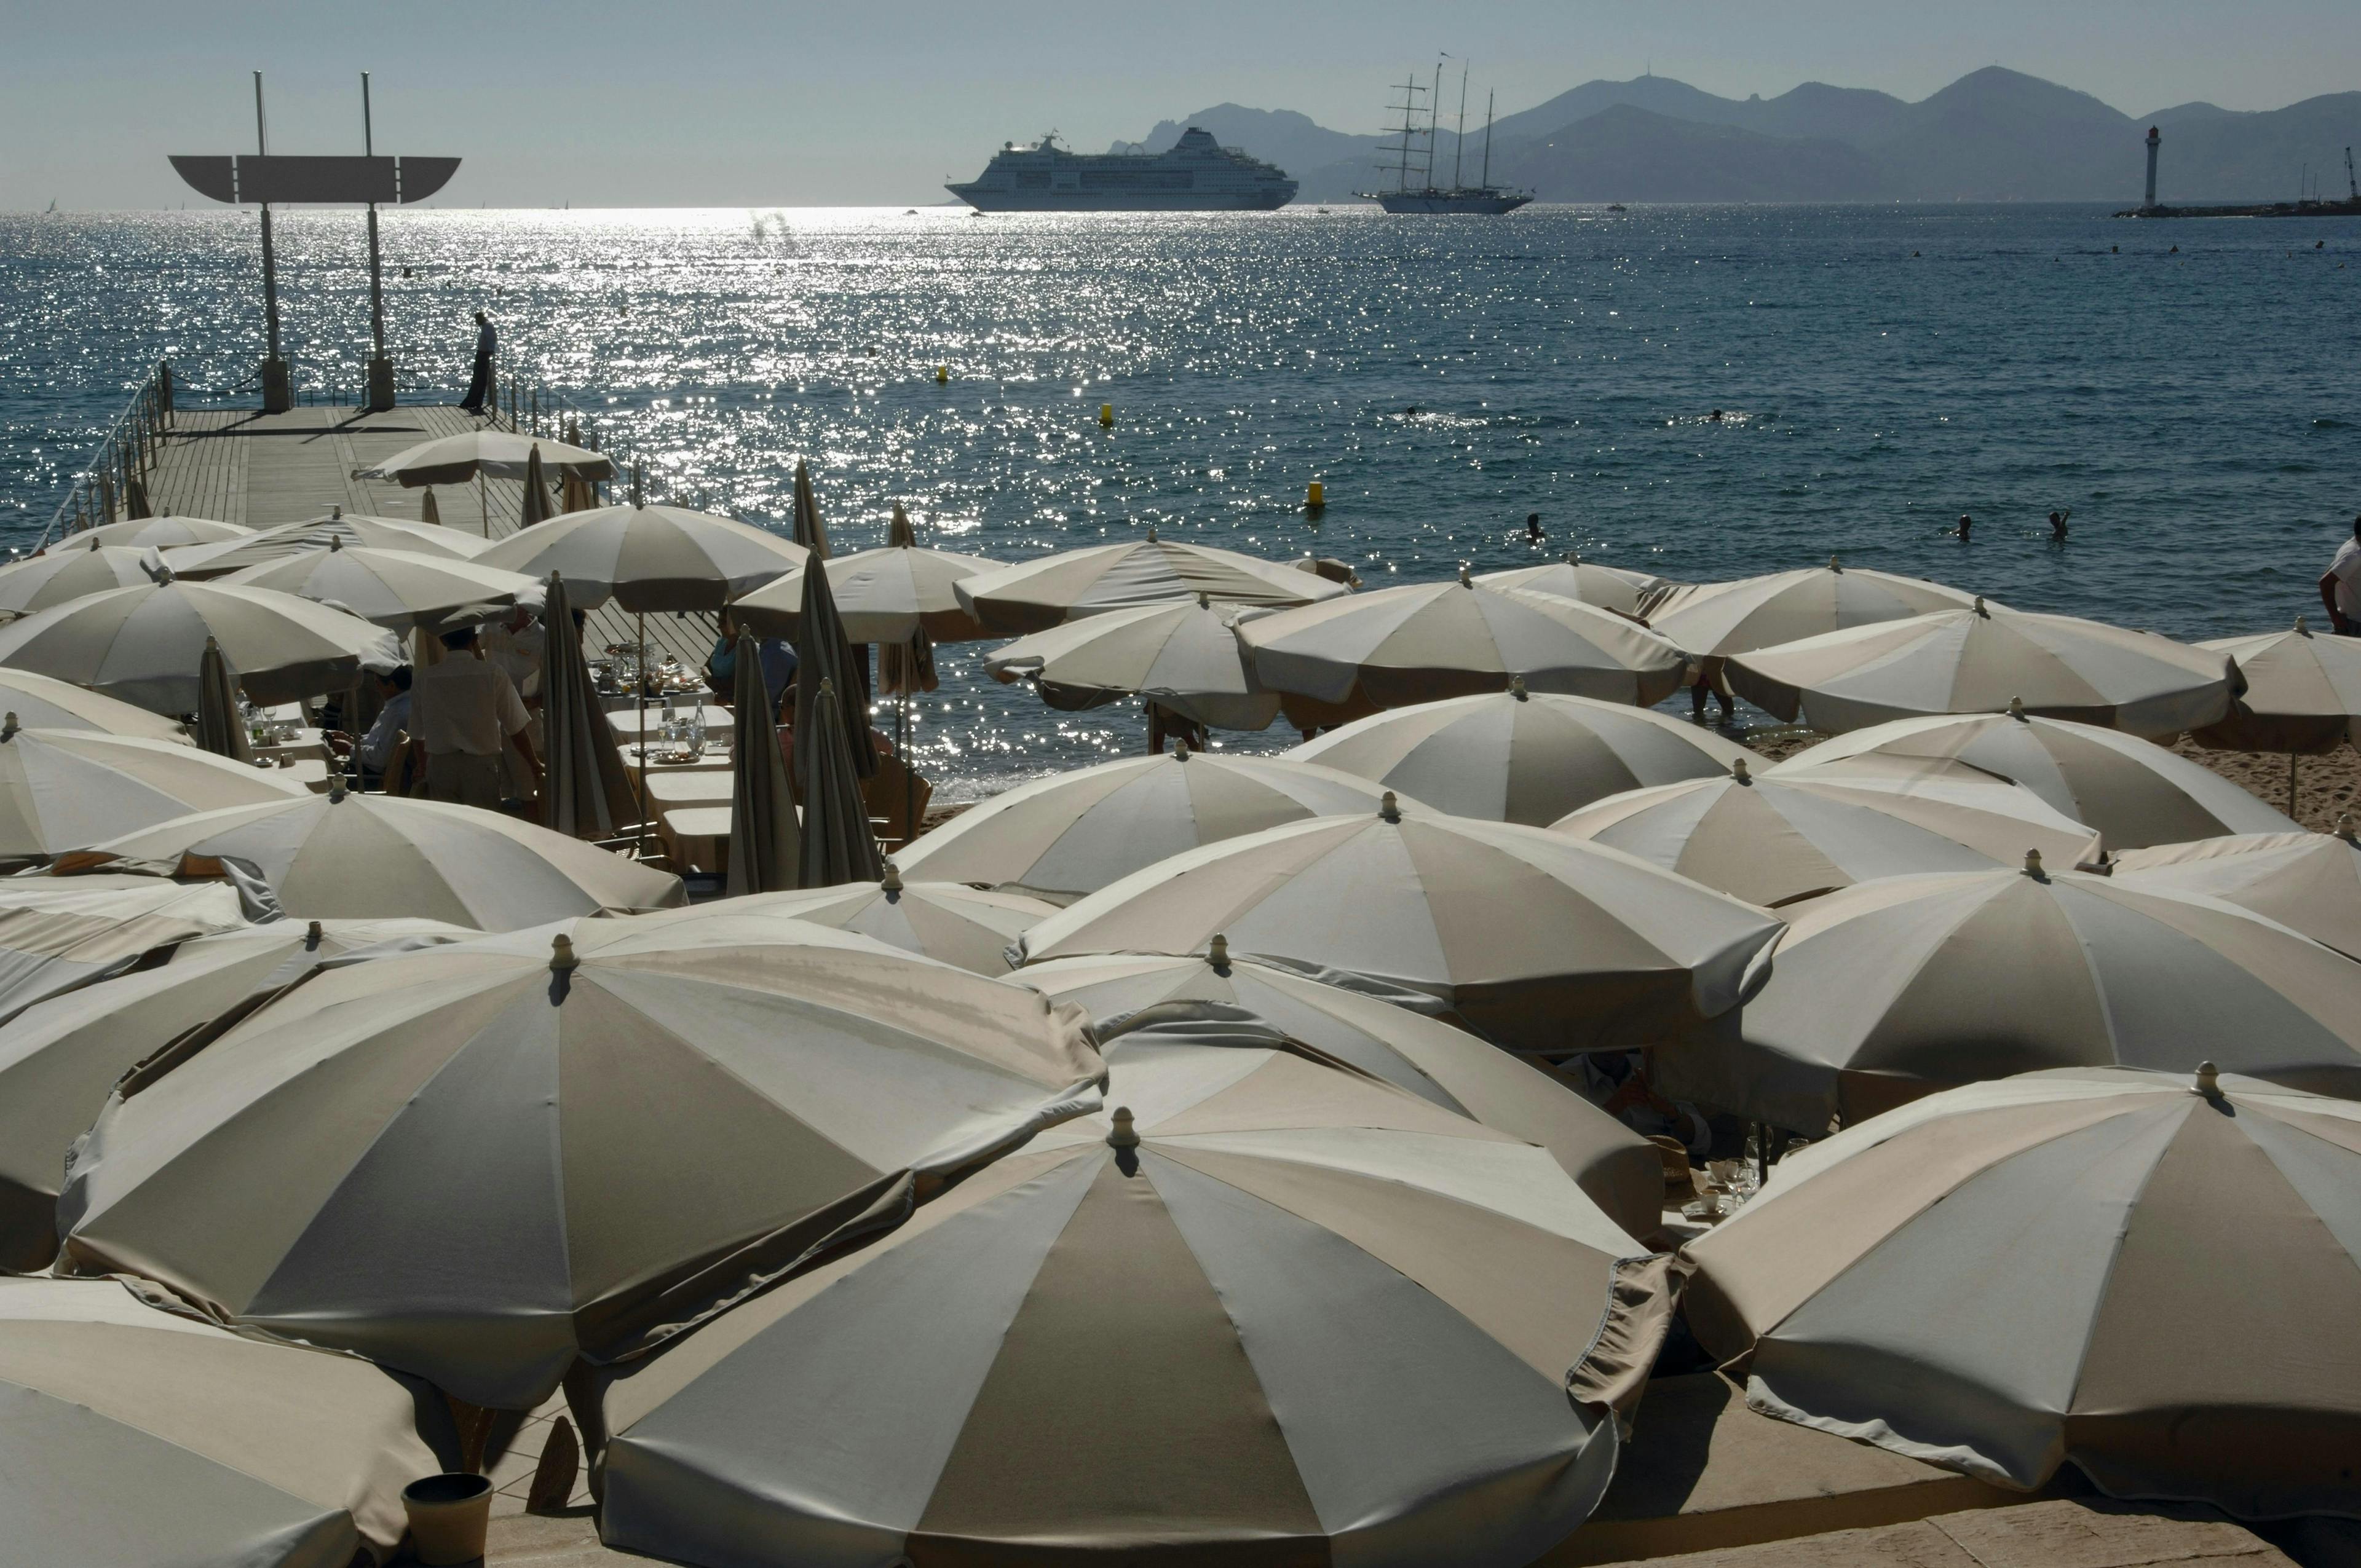 Umbrellas South of France coast via Getty Images